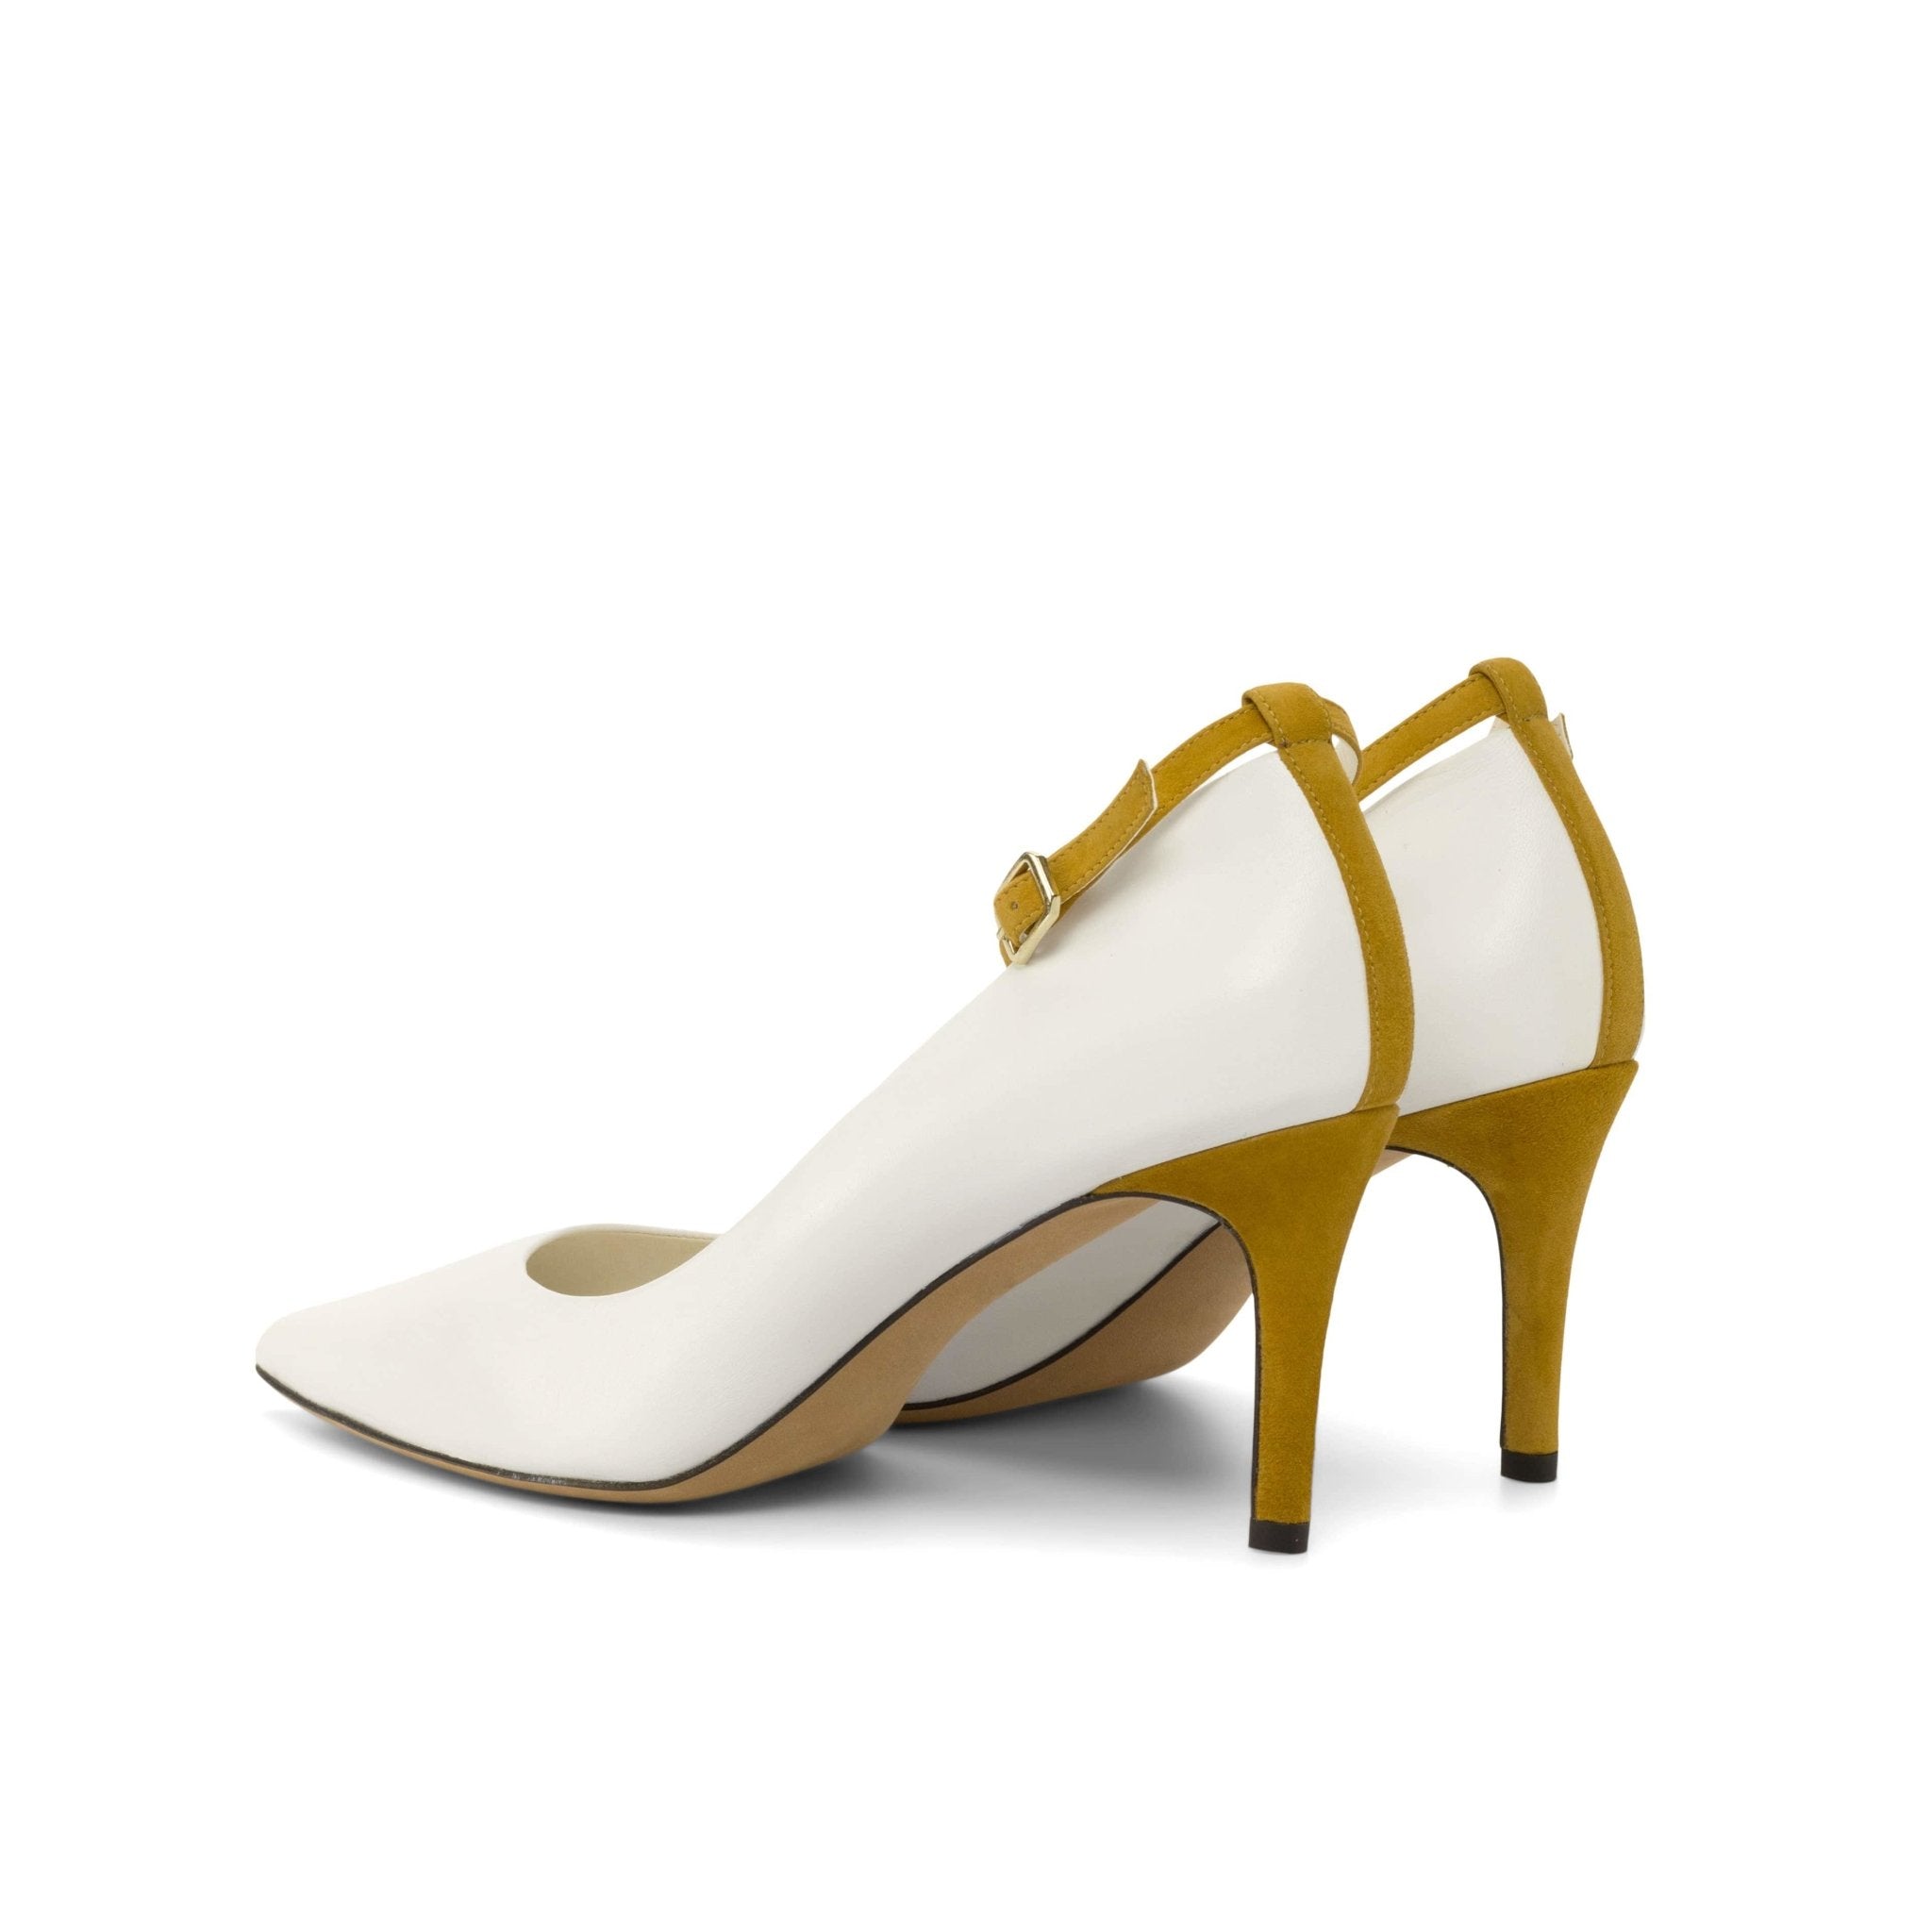 Harmonie 70mm Nappa Pure White Suede & Sand Heels - Maison de Kingsley Couture Harmonie et Fureur Spain